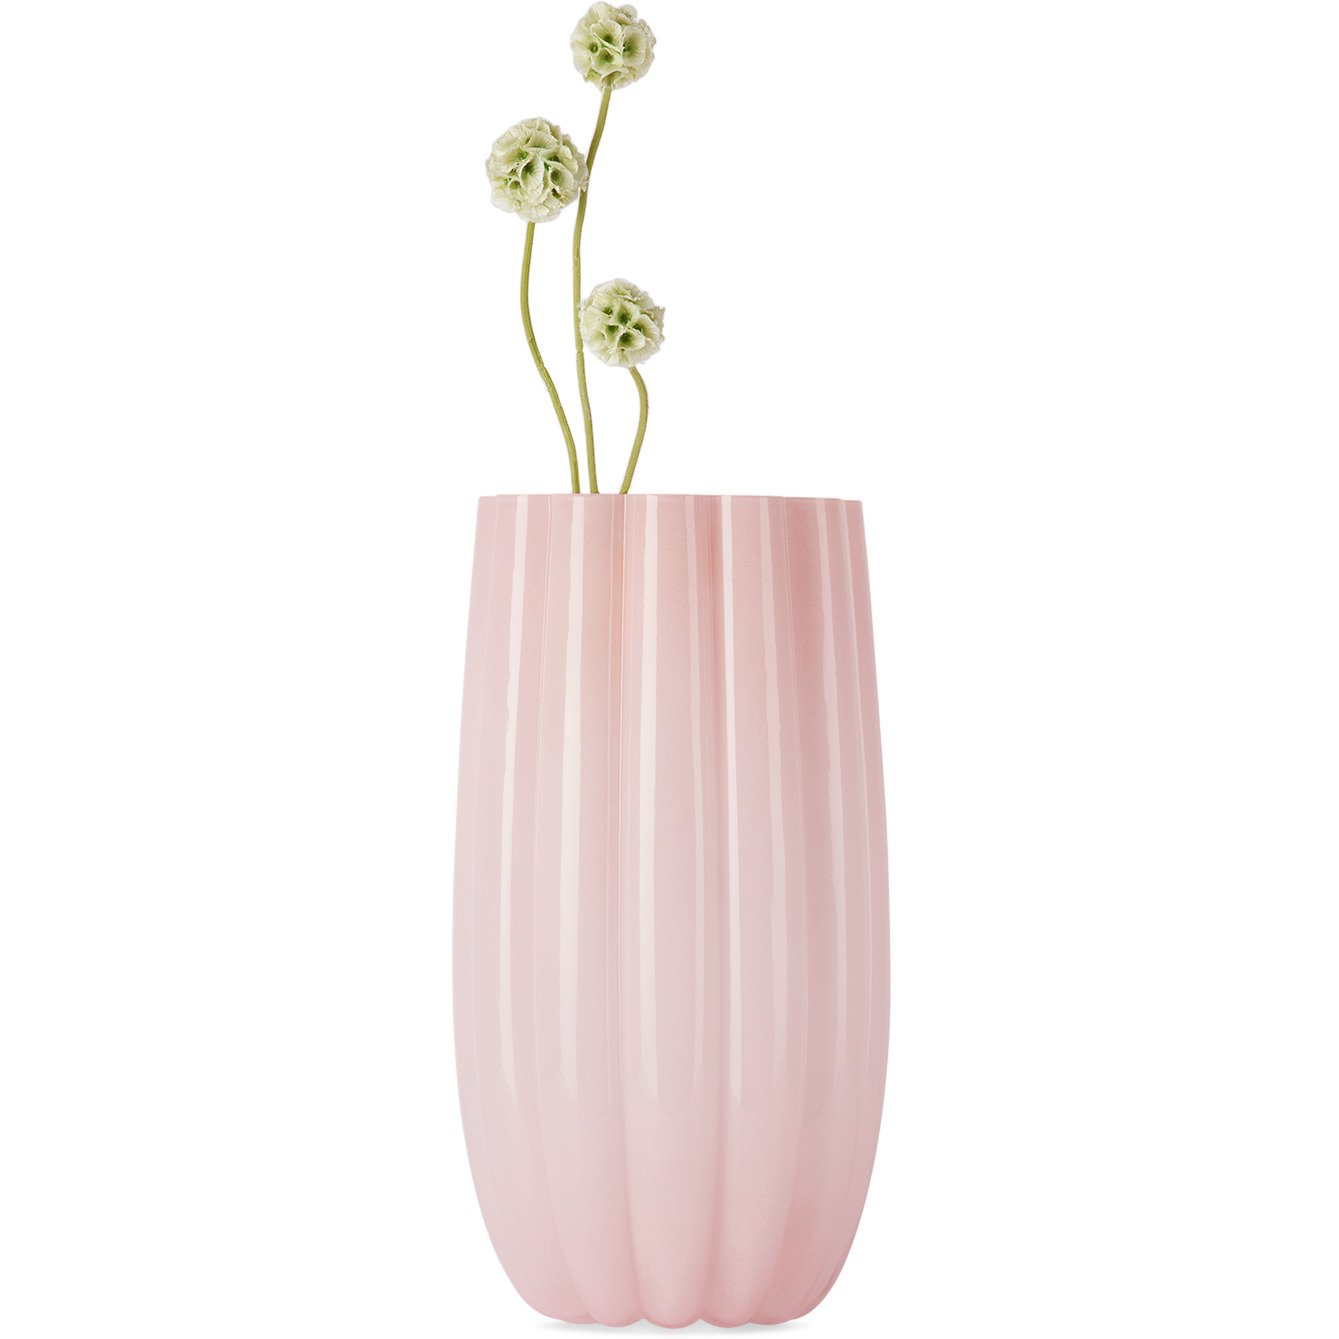 POLSPOTTEN Pink Melon Vase - image 1